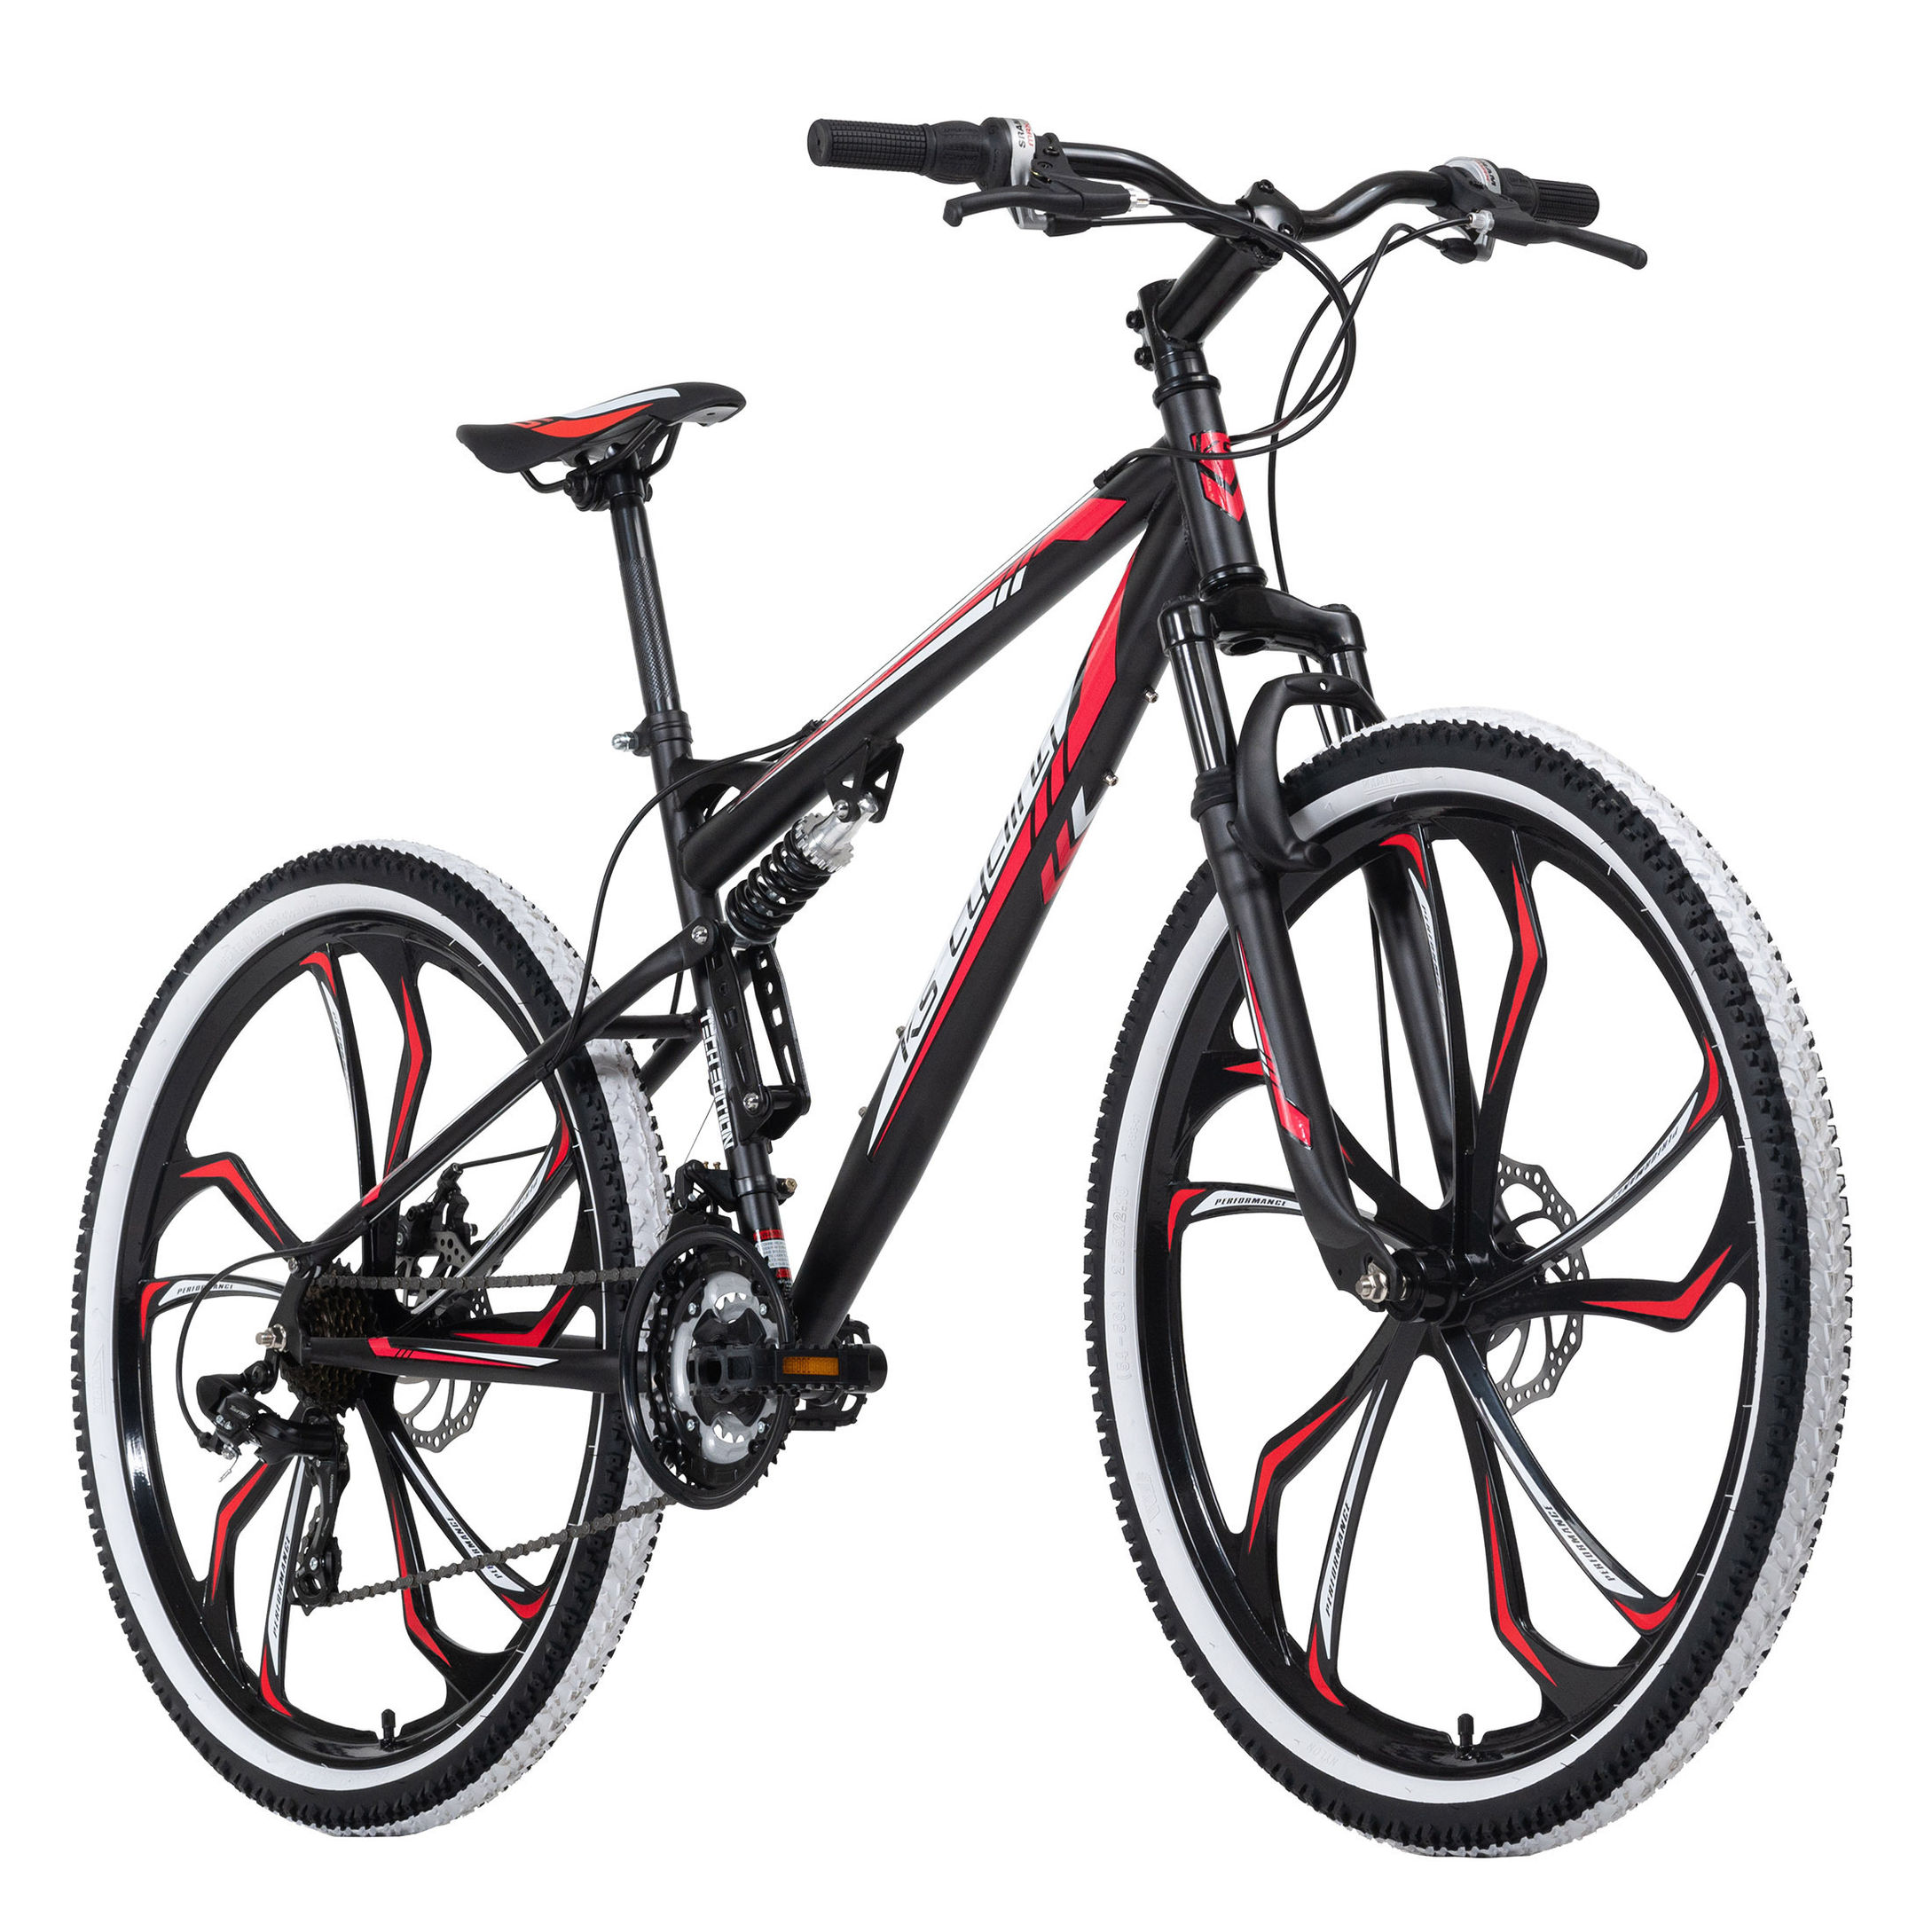 KS Cycling Mountainbike Hardtail 27,5 Zoll Scrawler schwarz-rot Größe: 46  cm | Weltbild.de